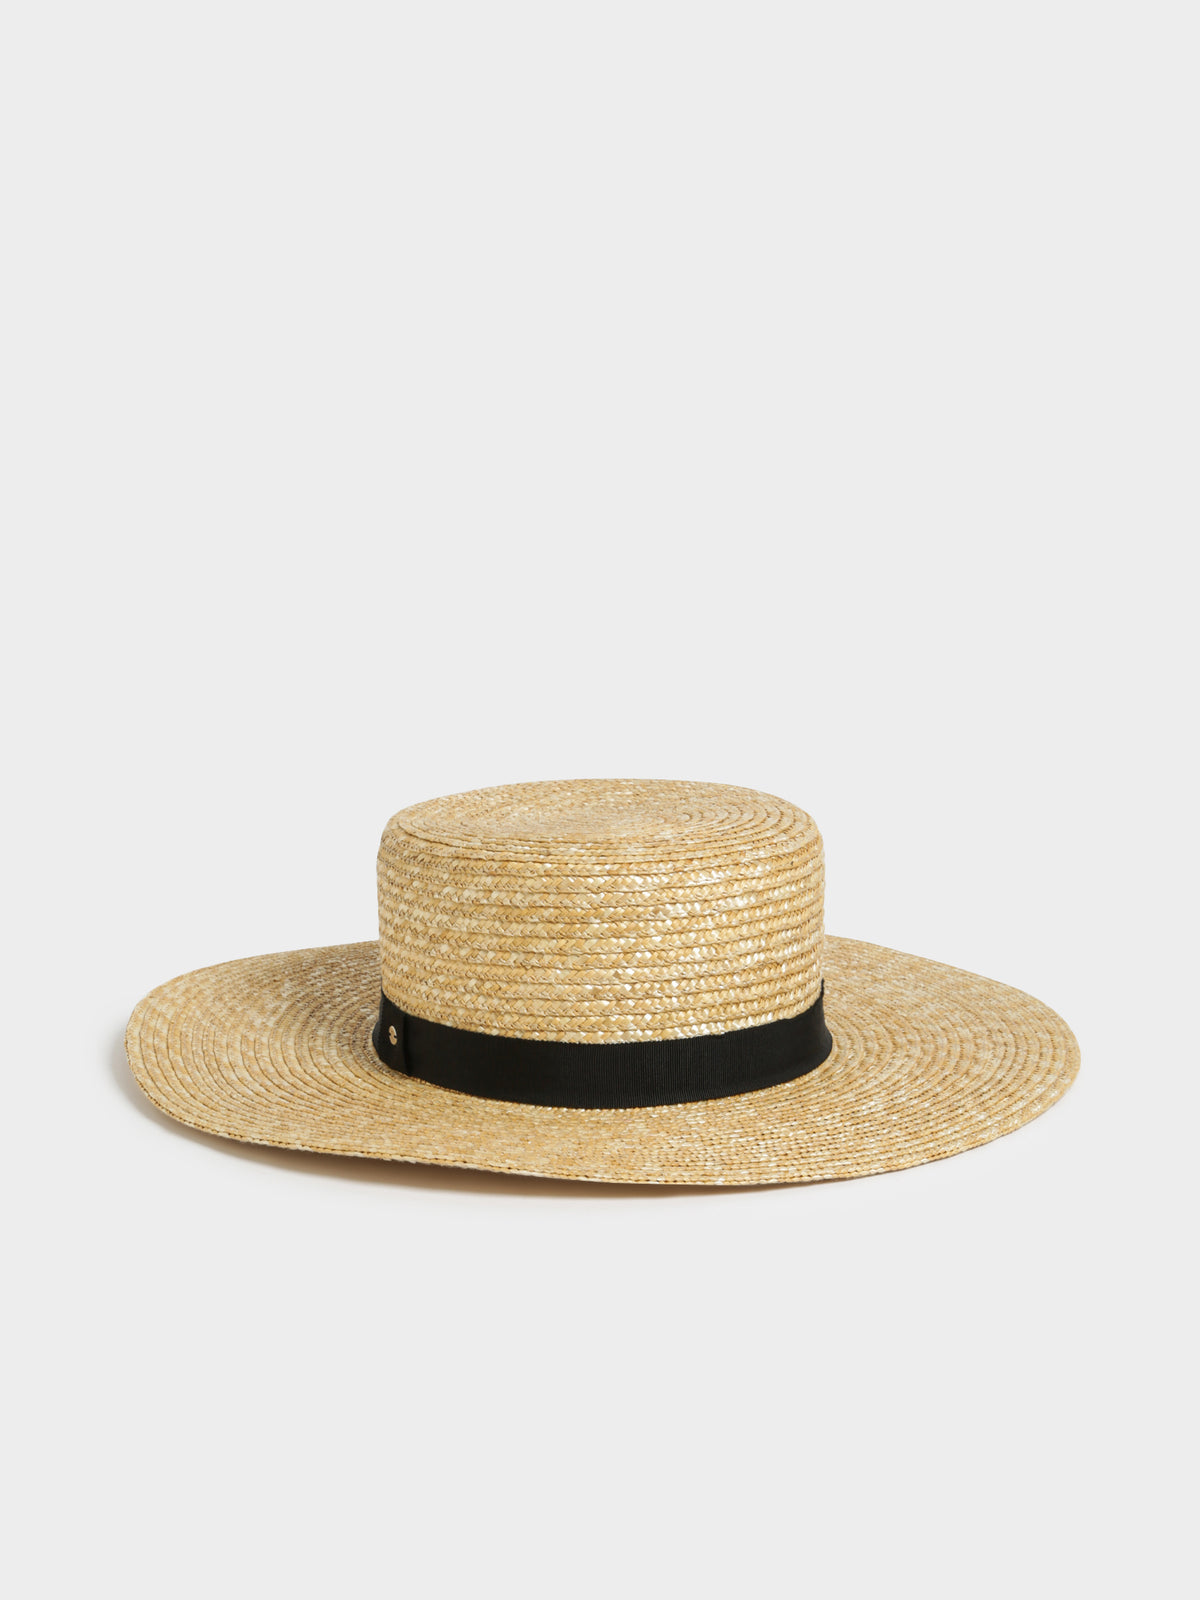 Natural Straw Boater Hat in Natural Black